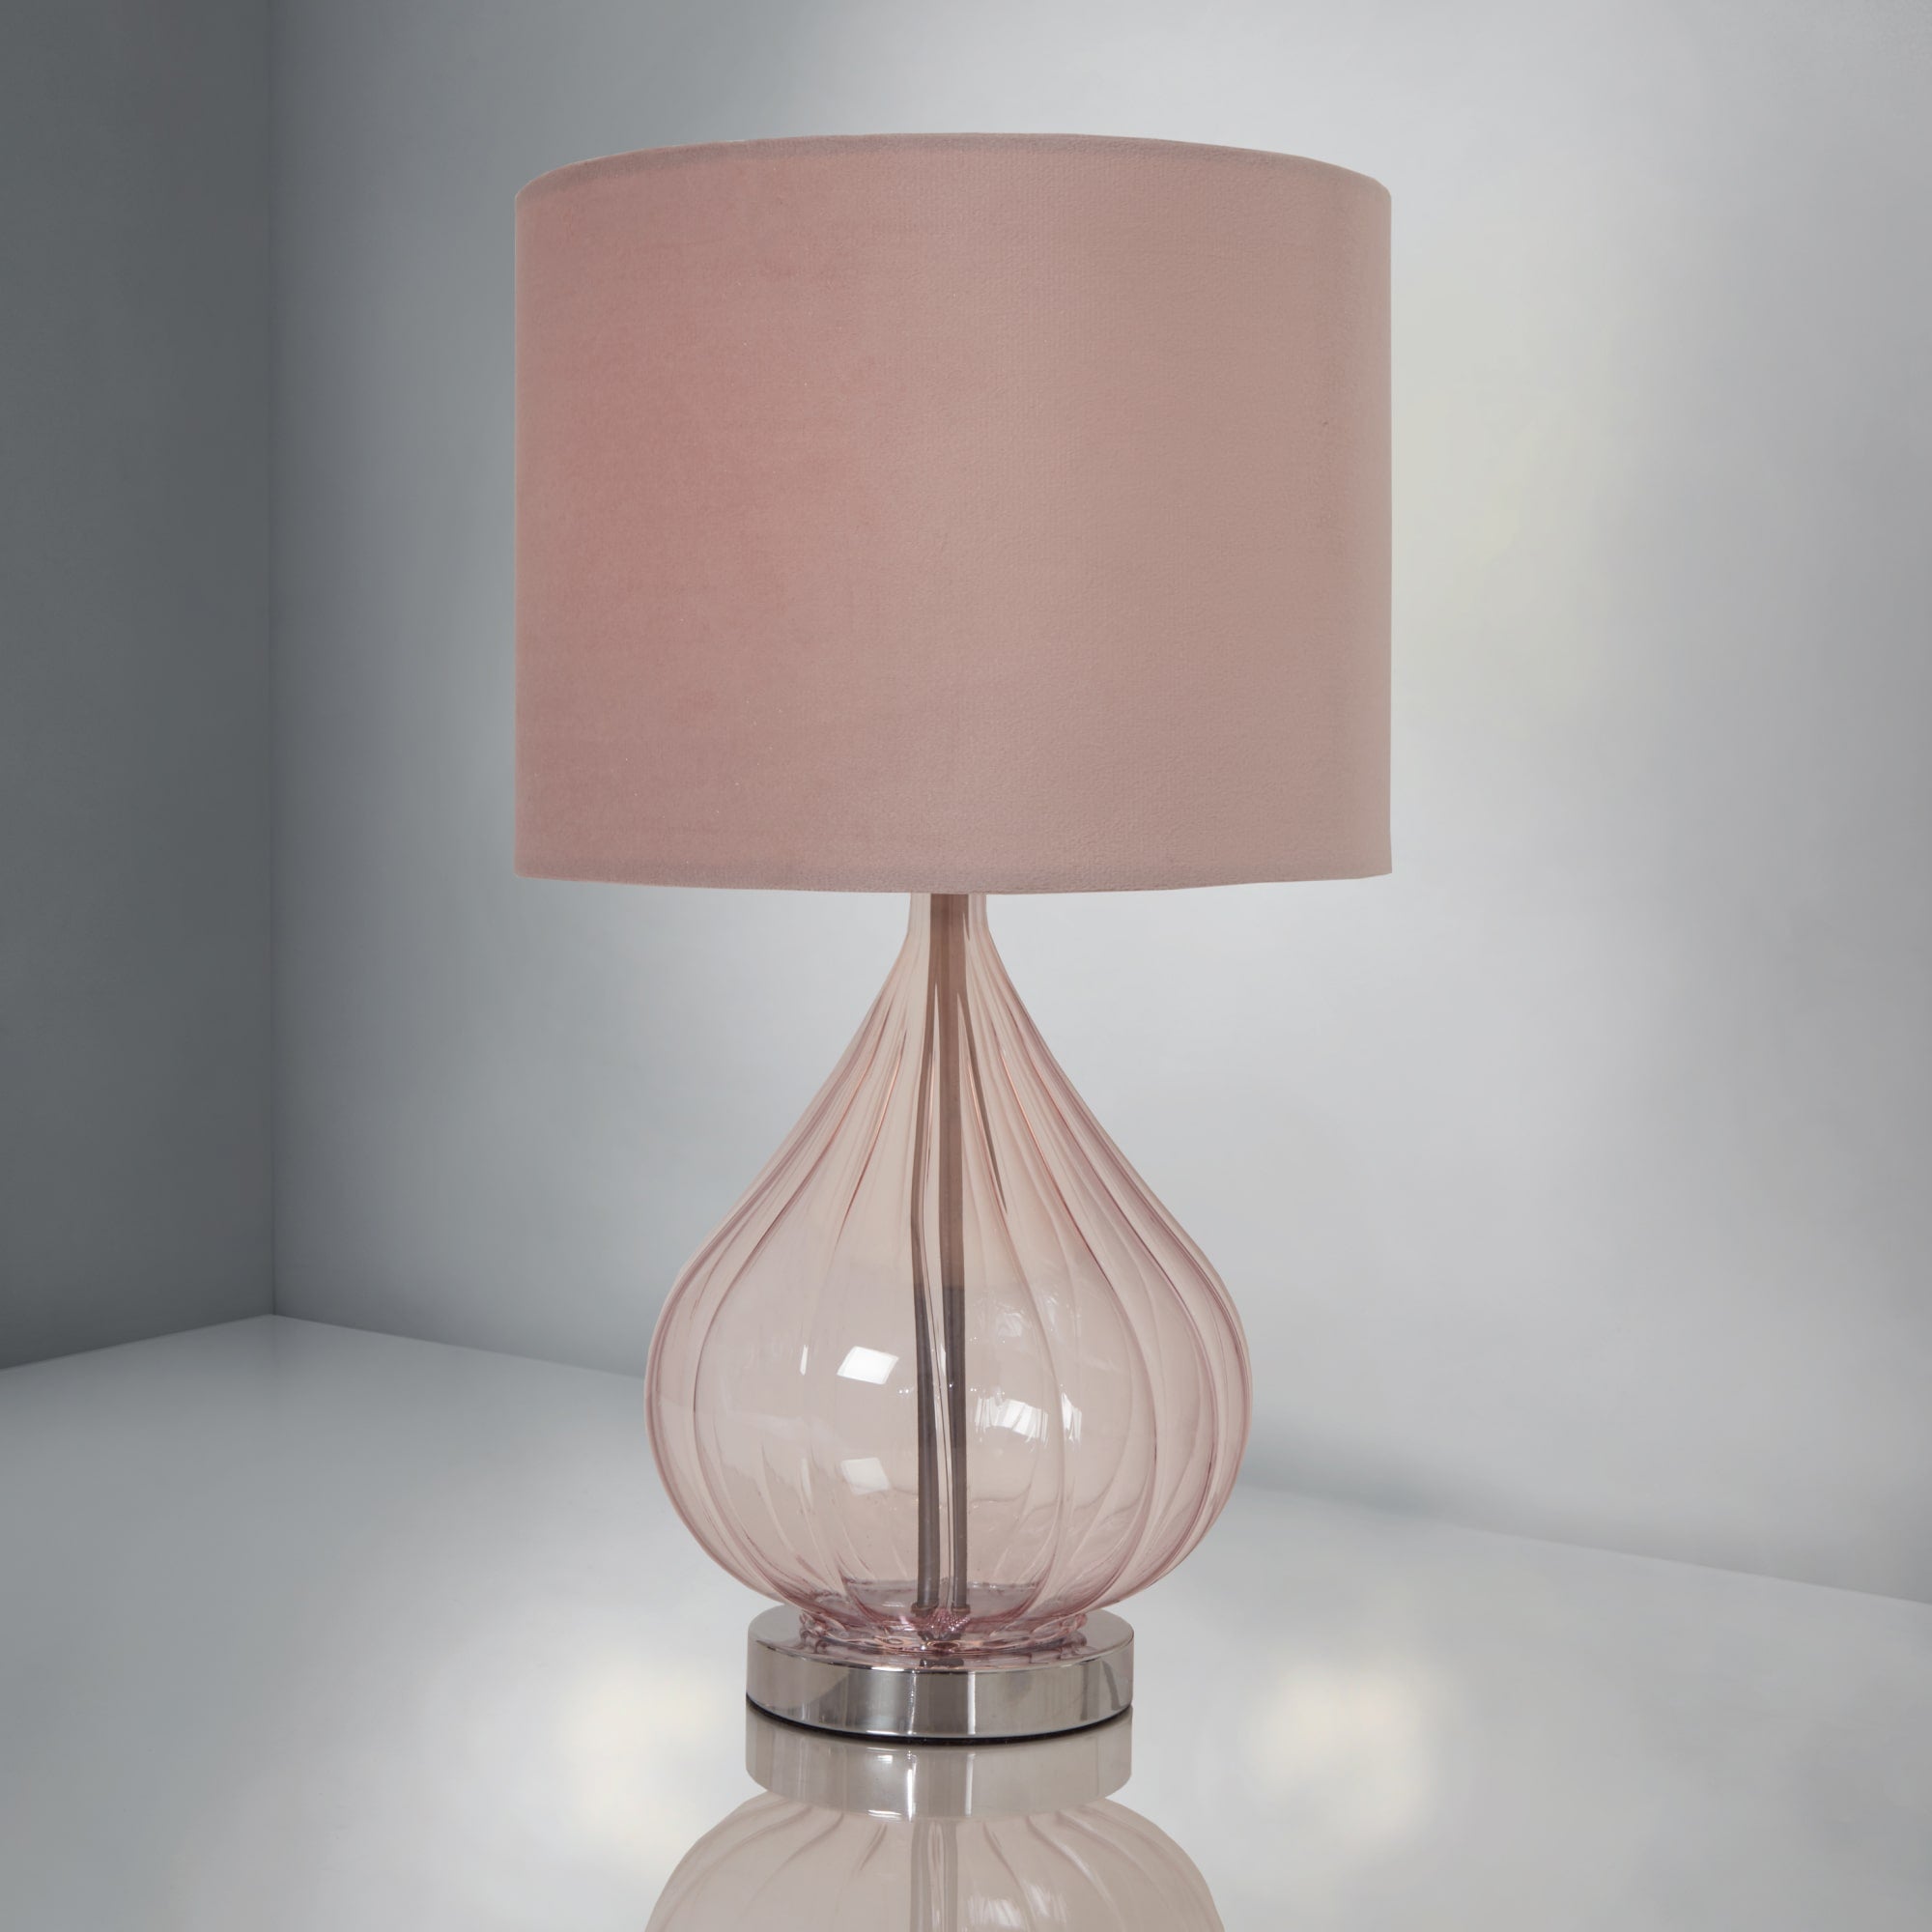 Mallory Table Lamp